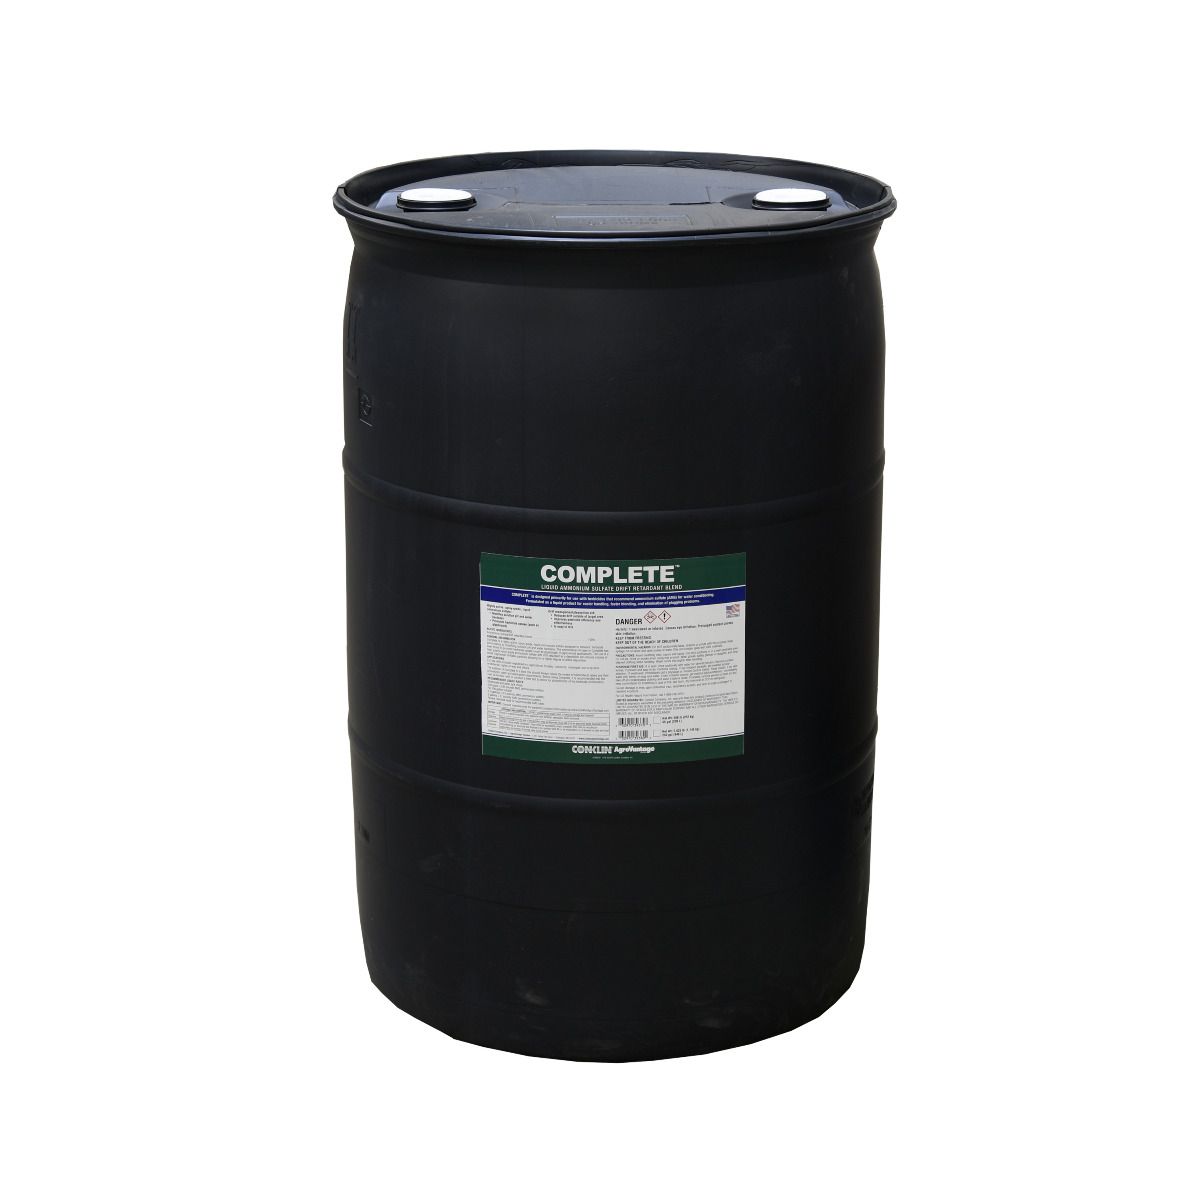 Complete™ Liquid Ams/Drift Retardant Blend 55 gallon drum ADJUVANTS